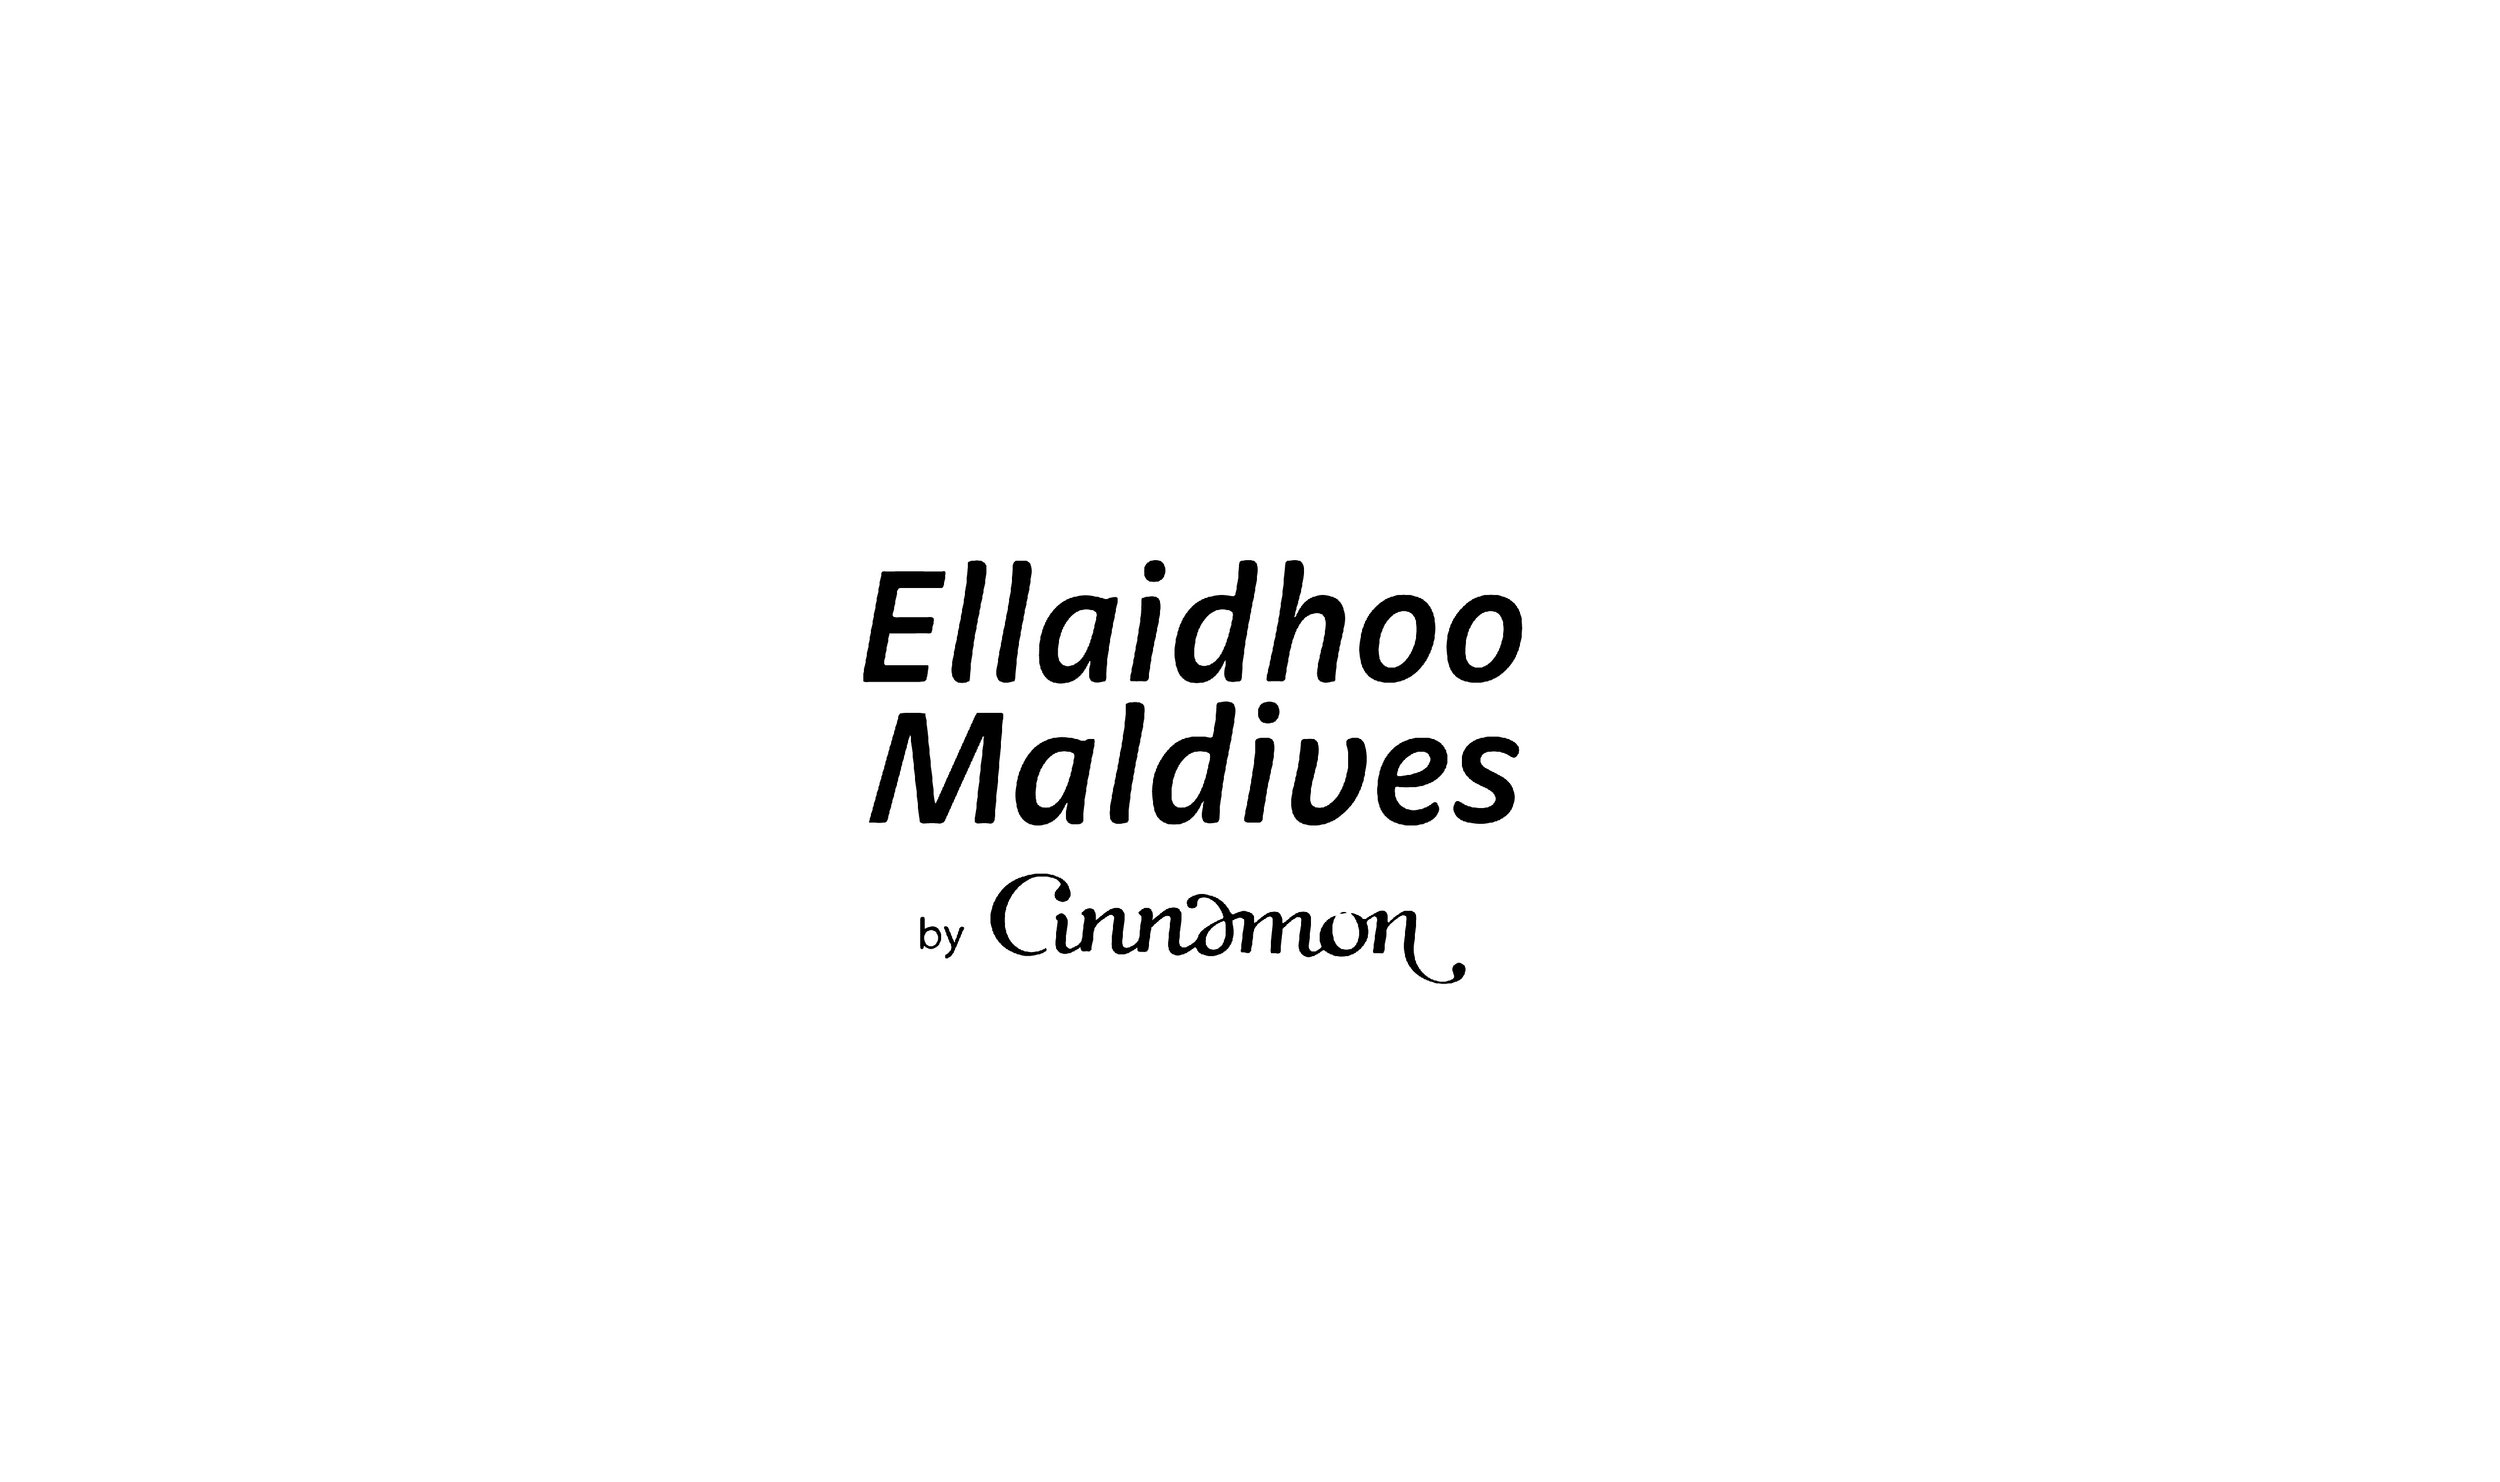 Ellaidhoo Maldives